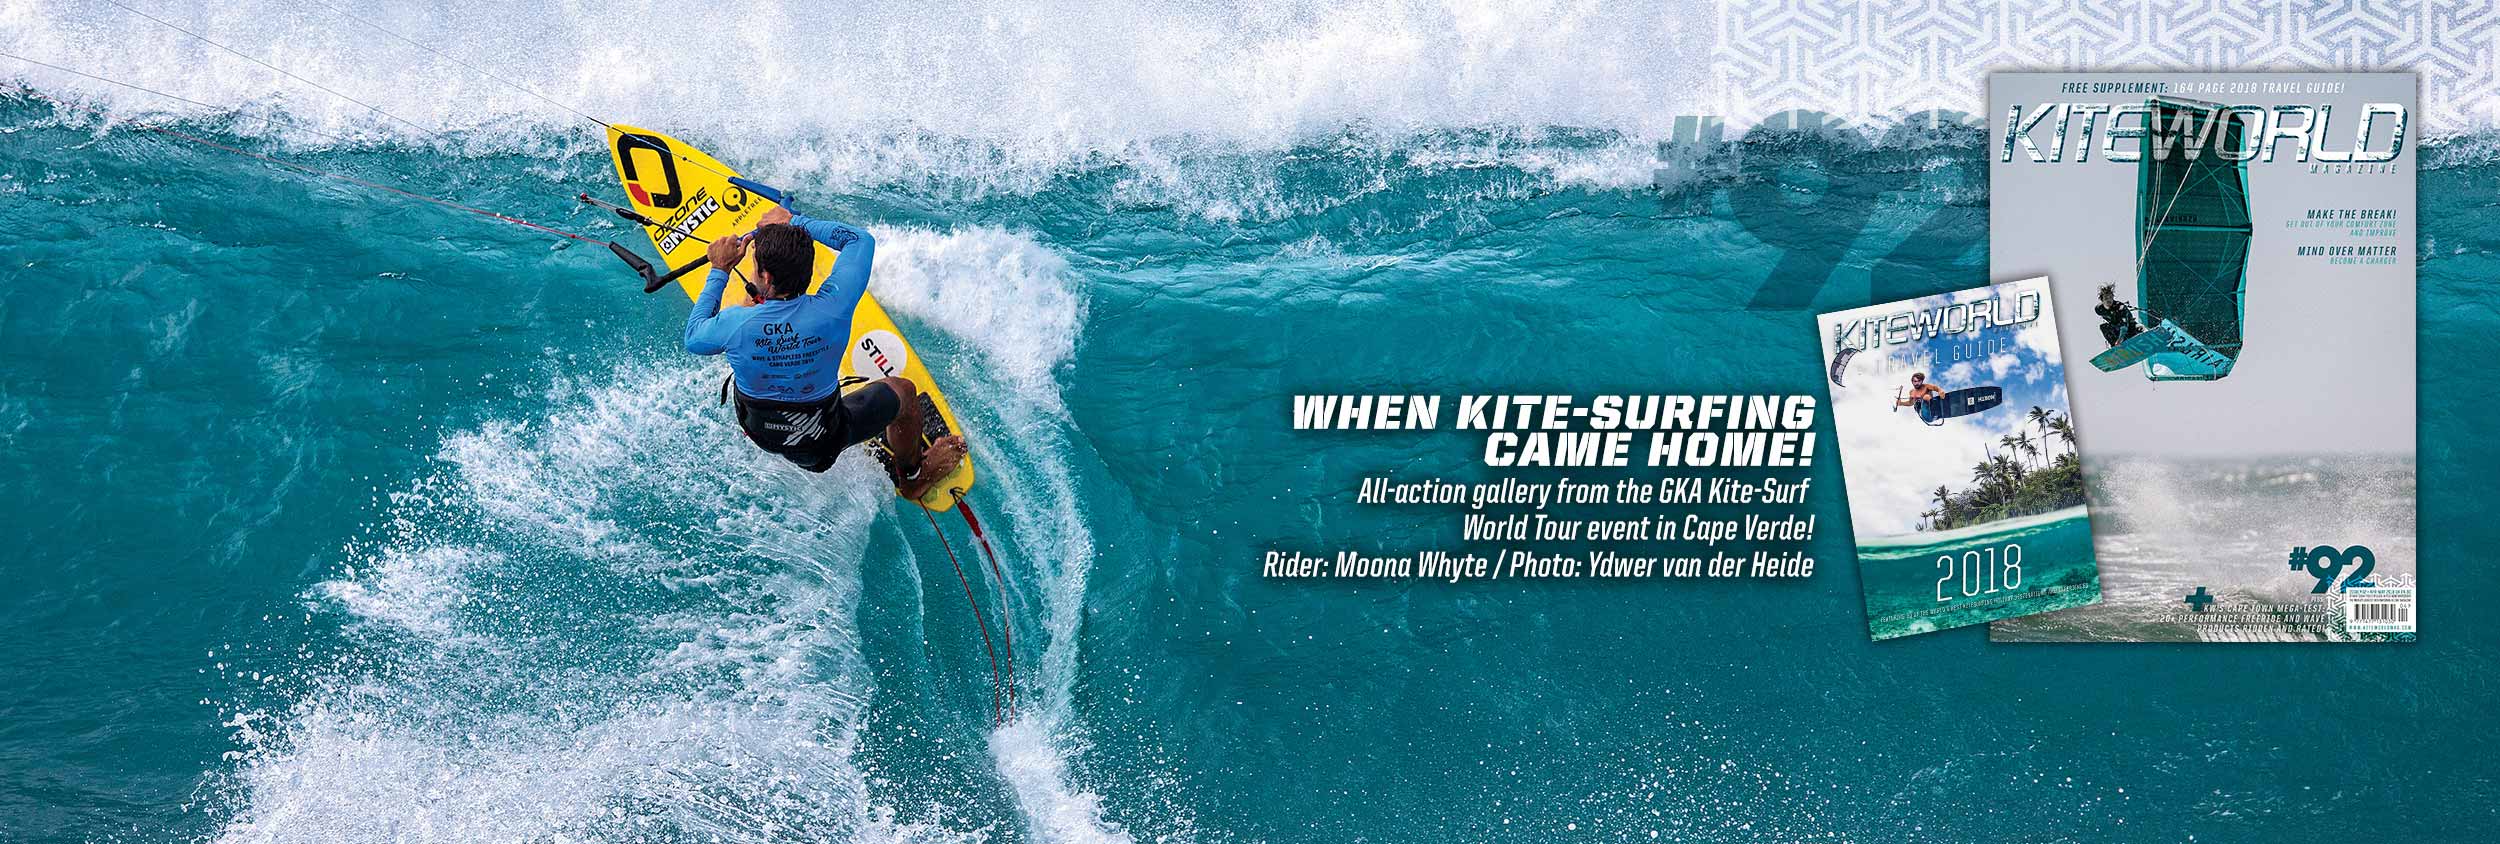 When kite-surfing came home! - Kiteworld Magazine issue 92